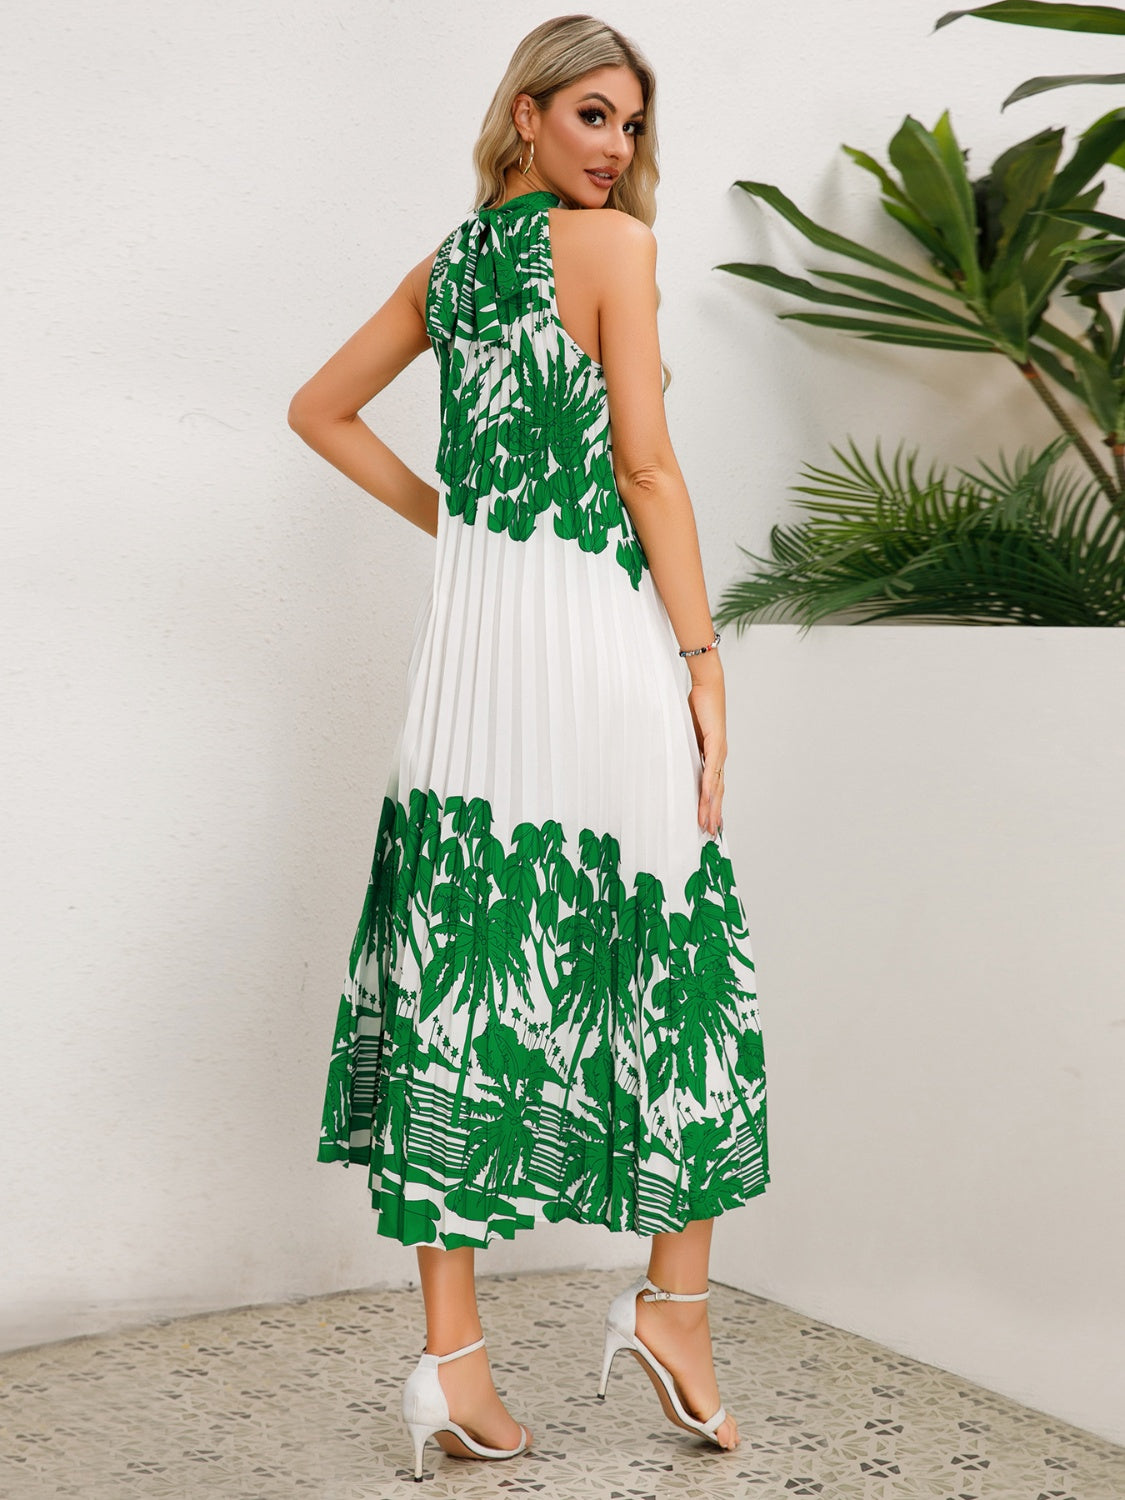 TEEK - Tied Halter Printed Sleeveless  Dress DRESS TEEK Trend Green S 